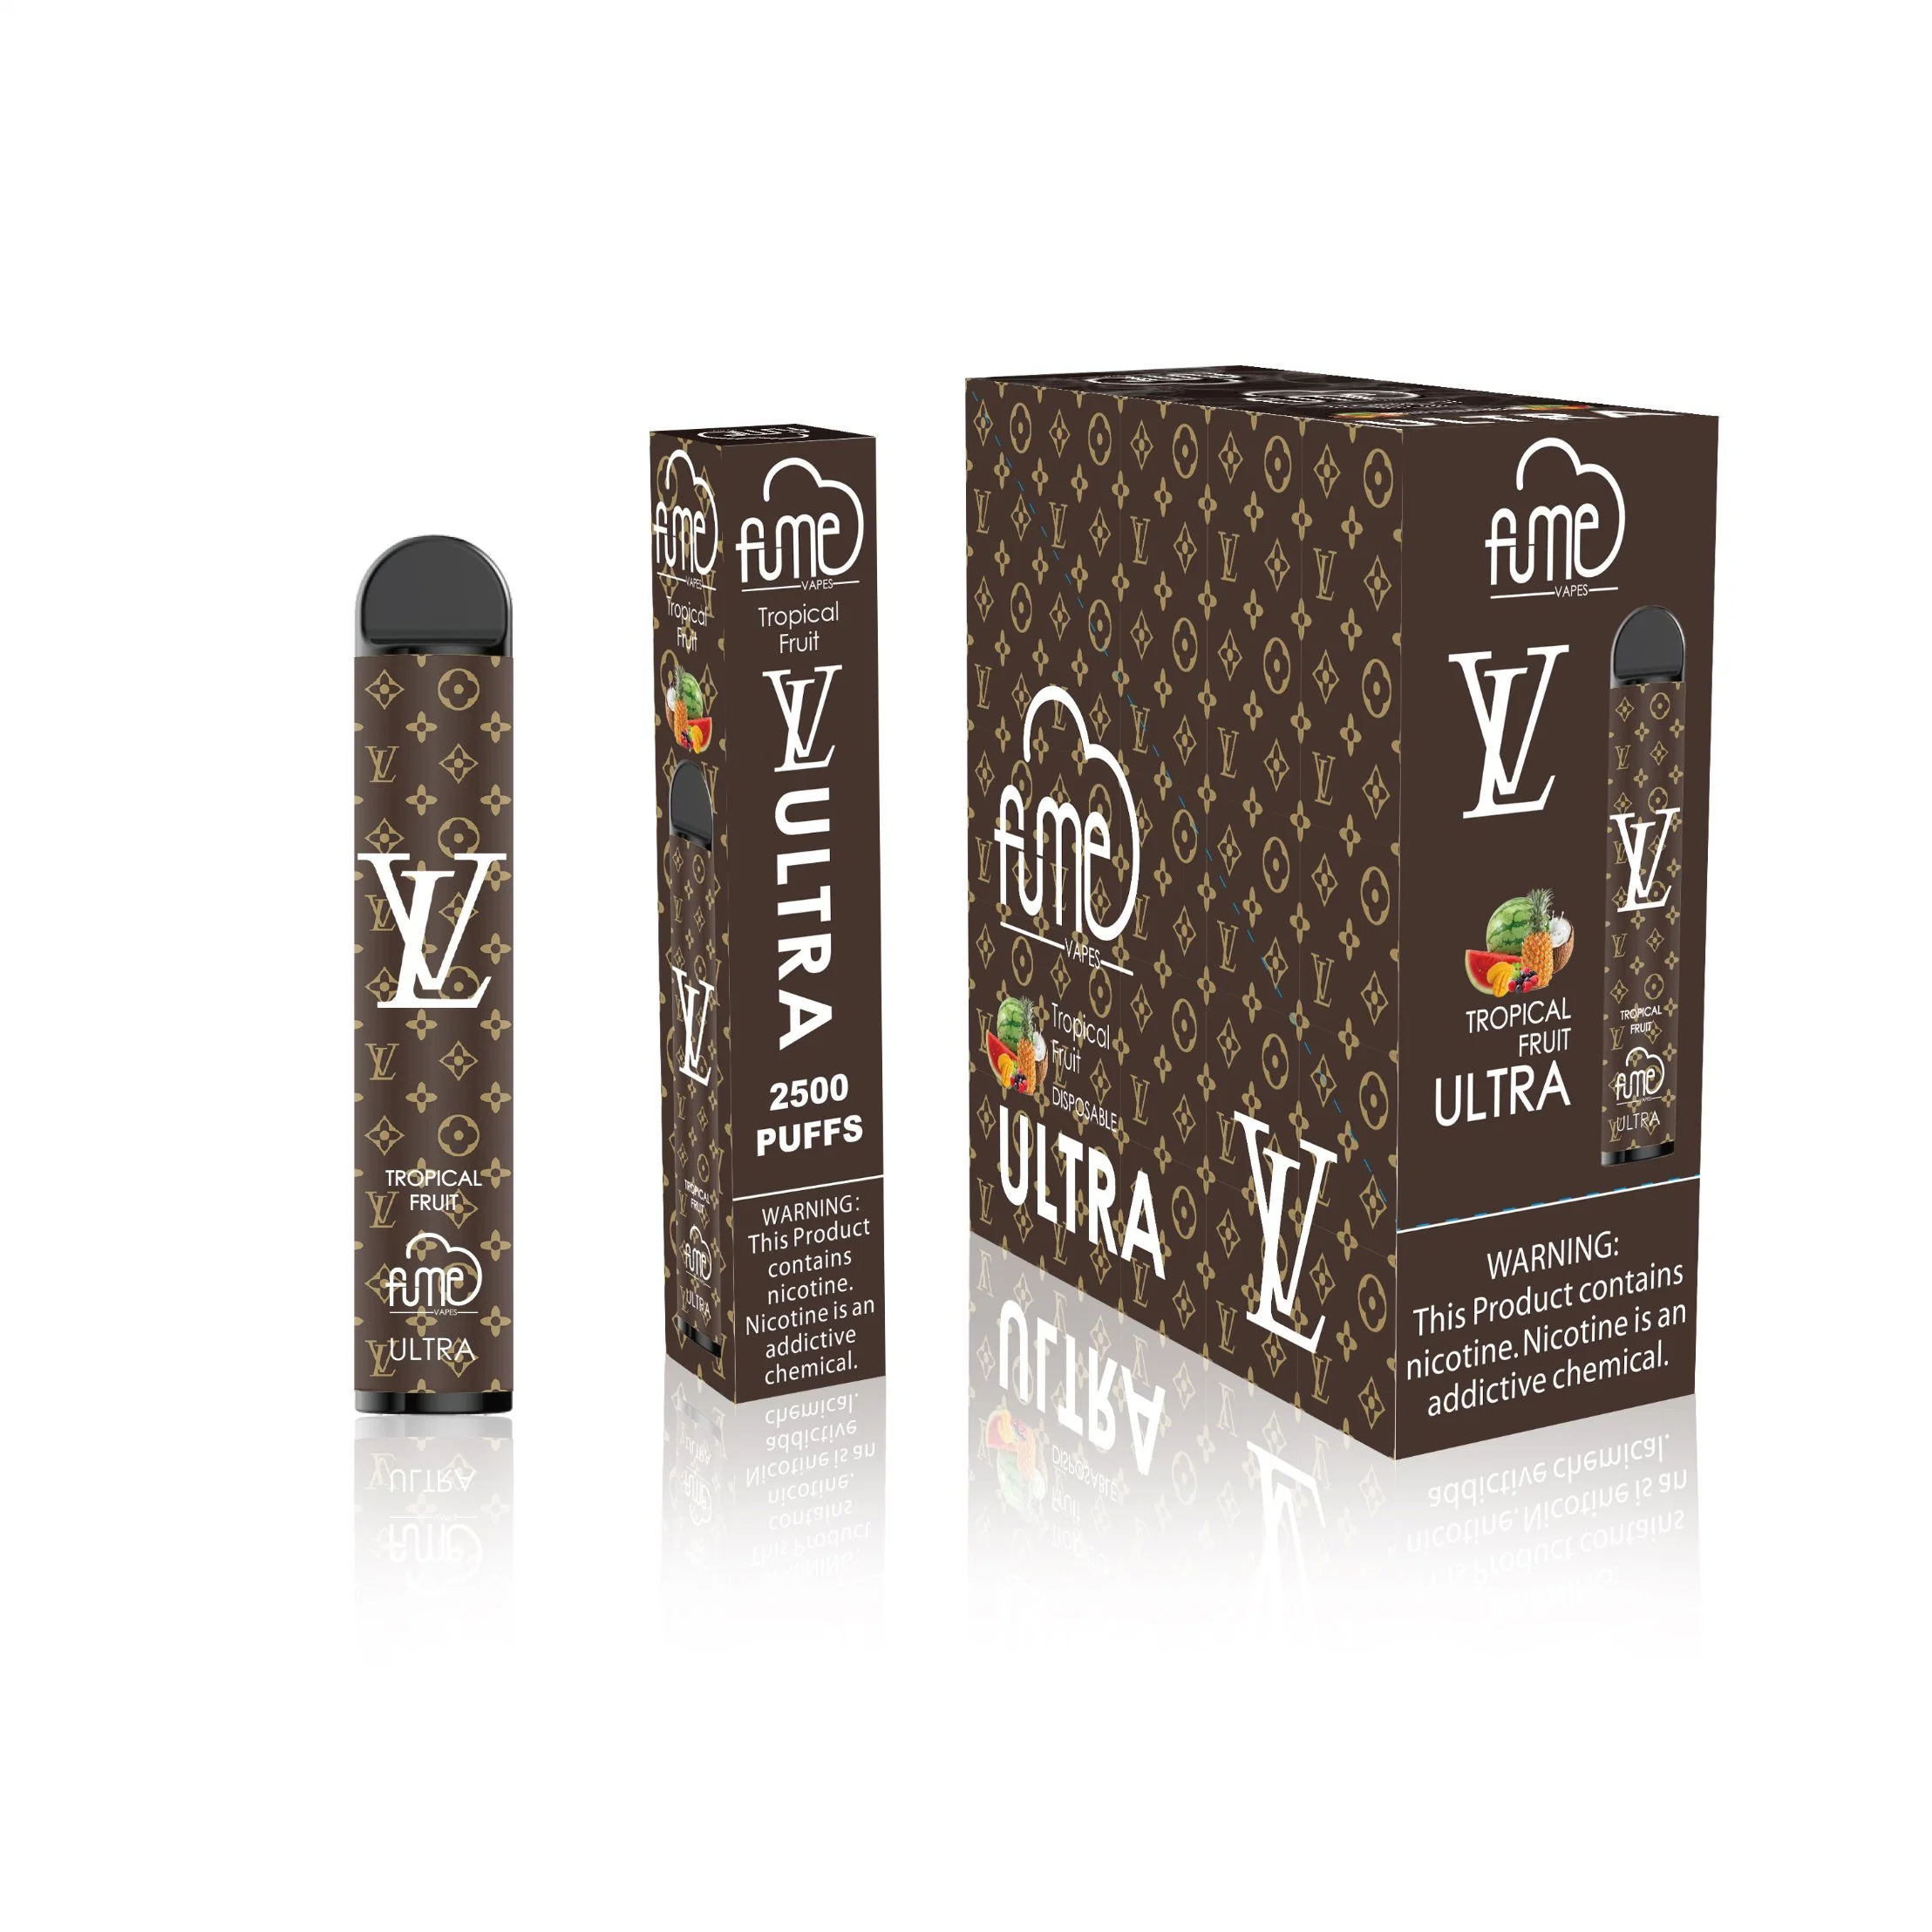 Vees Fume Ultra 2500 قلم E-Cigarette تصميم L. V